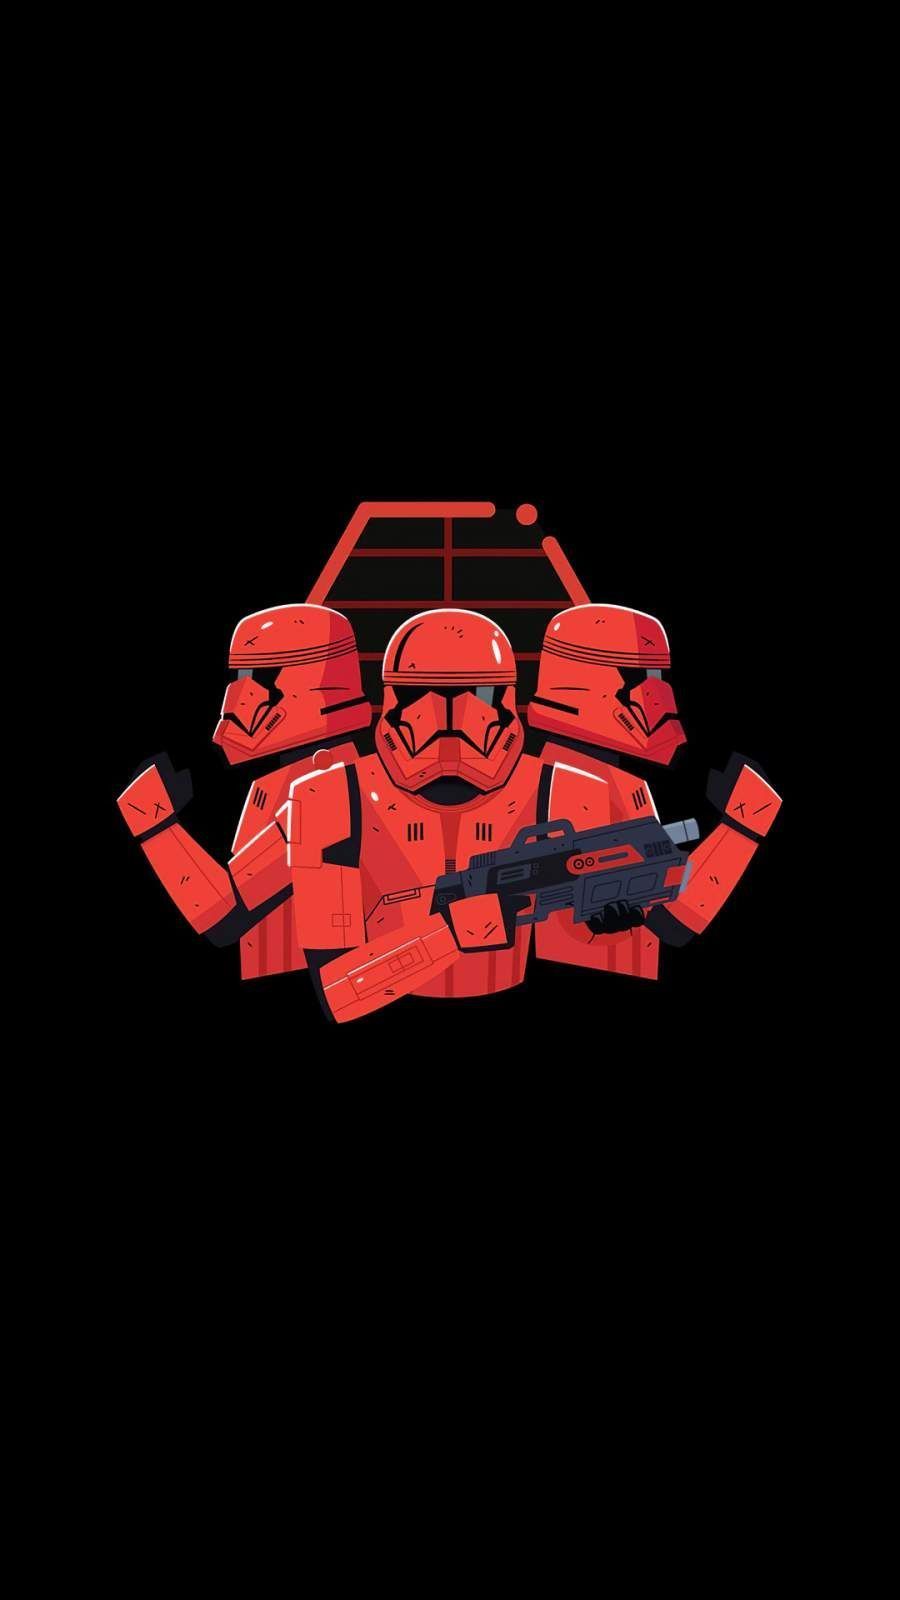 Star Wars Stormtrooper iPhone Wallpaper Free Star Wars Stormtrooper iPhone Background